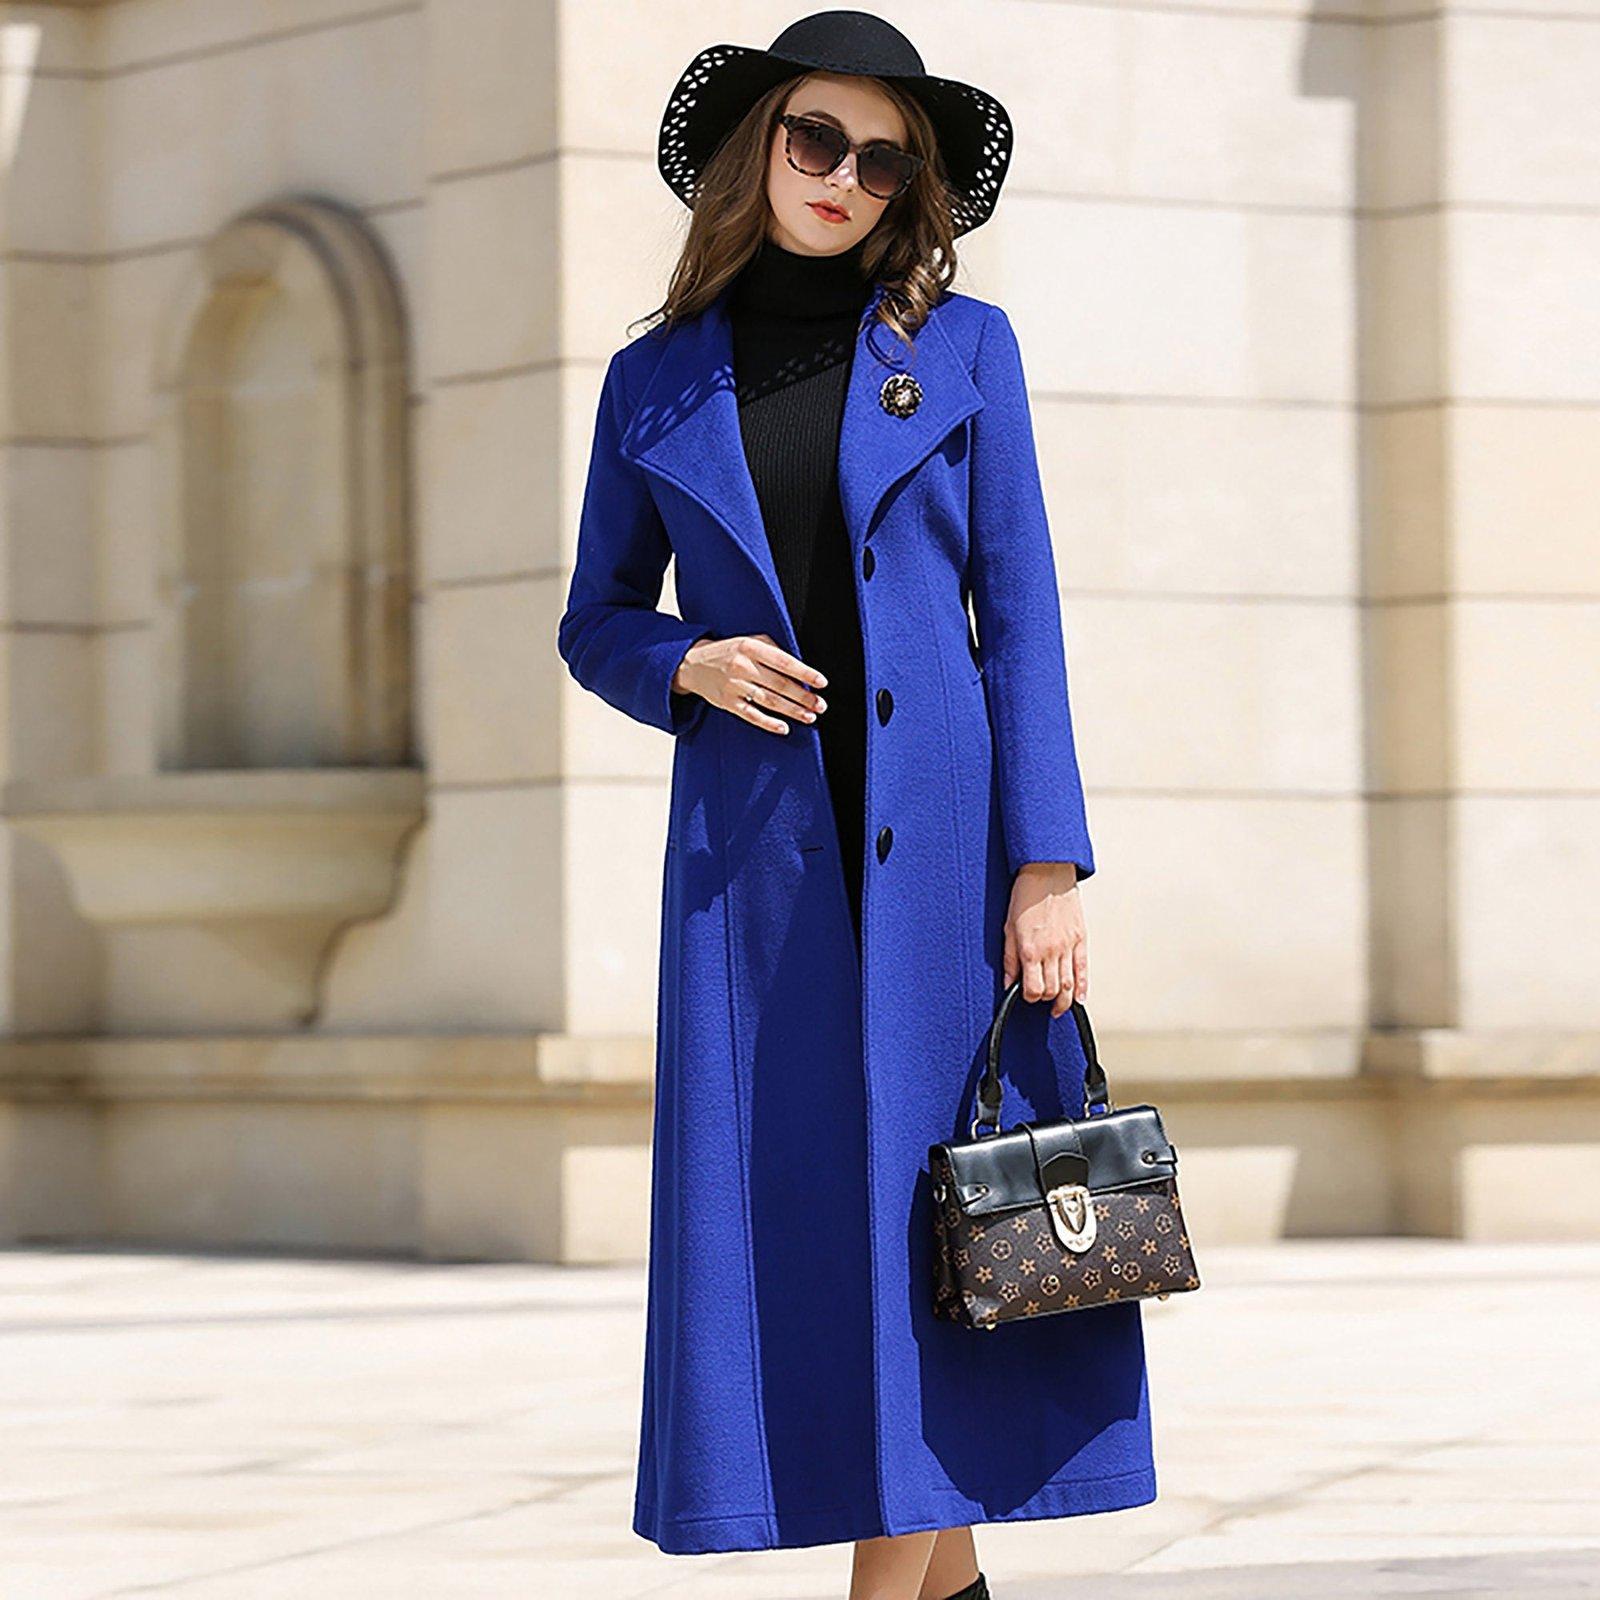 Louis Vuitton dark blue wool angora blend classic coat with gold